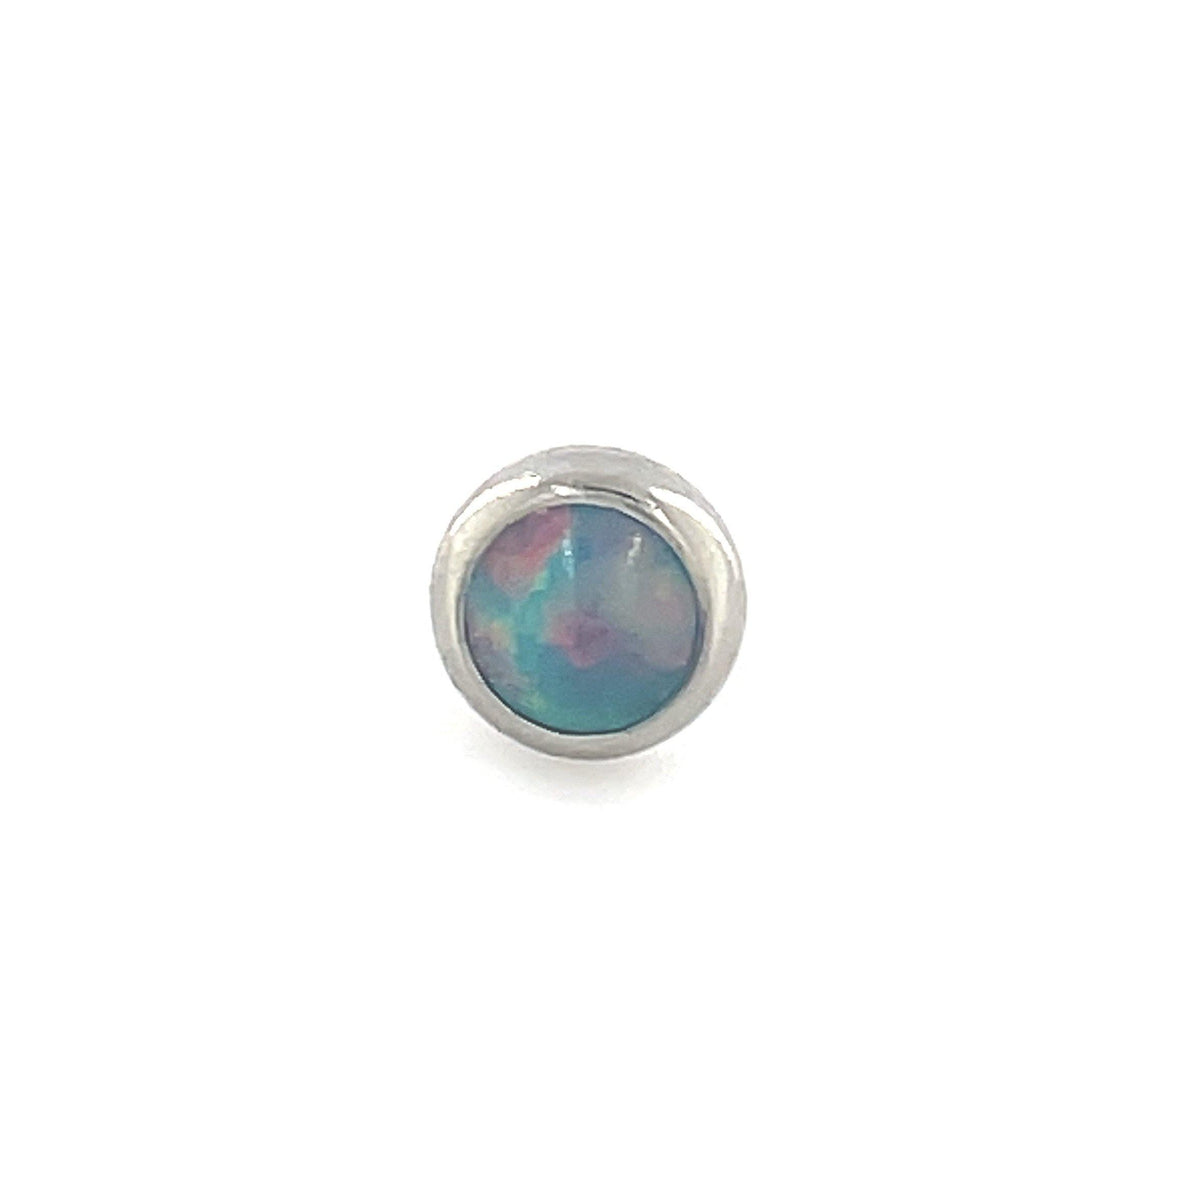 Industrial Strength Titanium Teal Opal Cabochon Gem End - Isha Body Jewellery